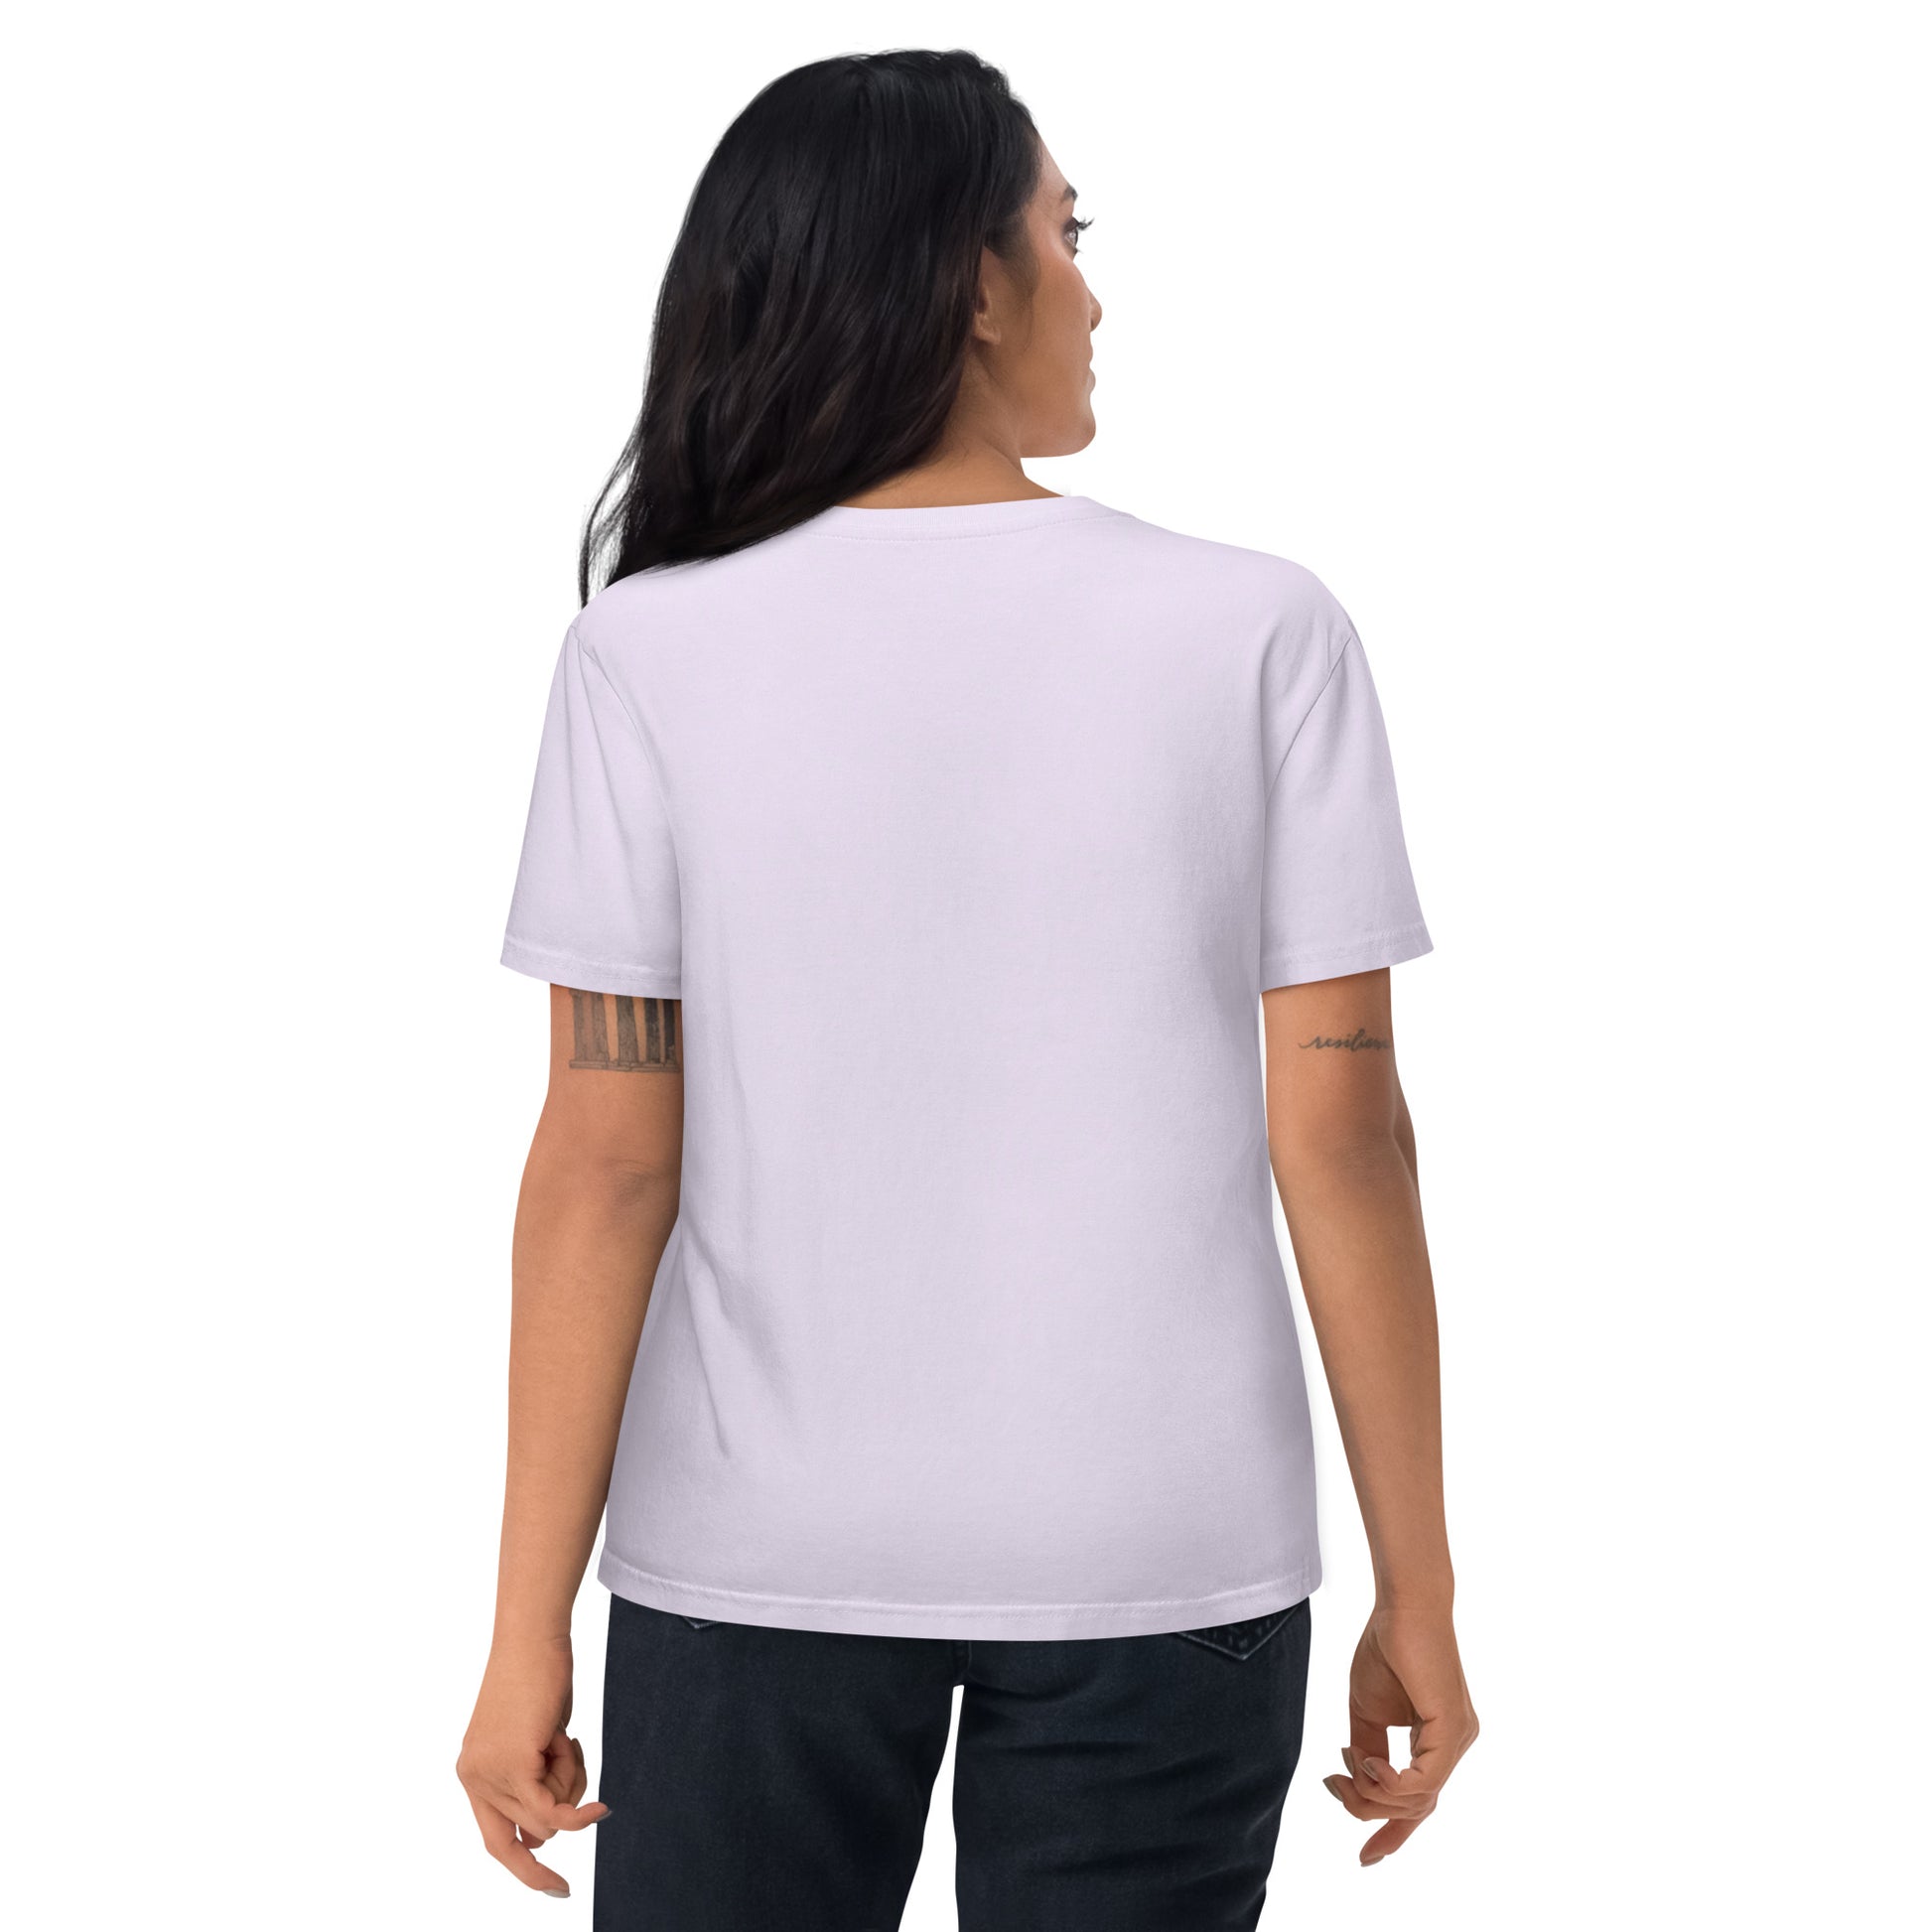 "BUG FREE" Unisex organic cotton light t-shirt (embroidered) The Developer Shop